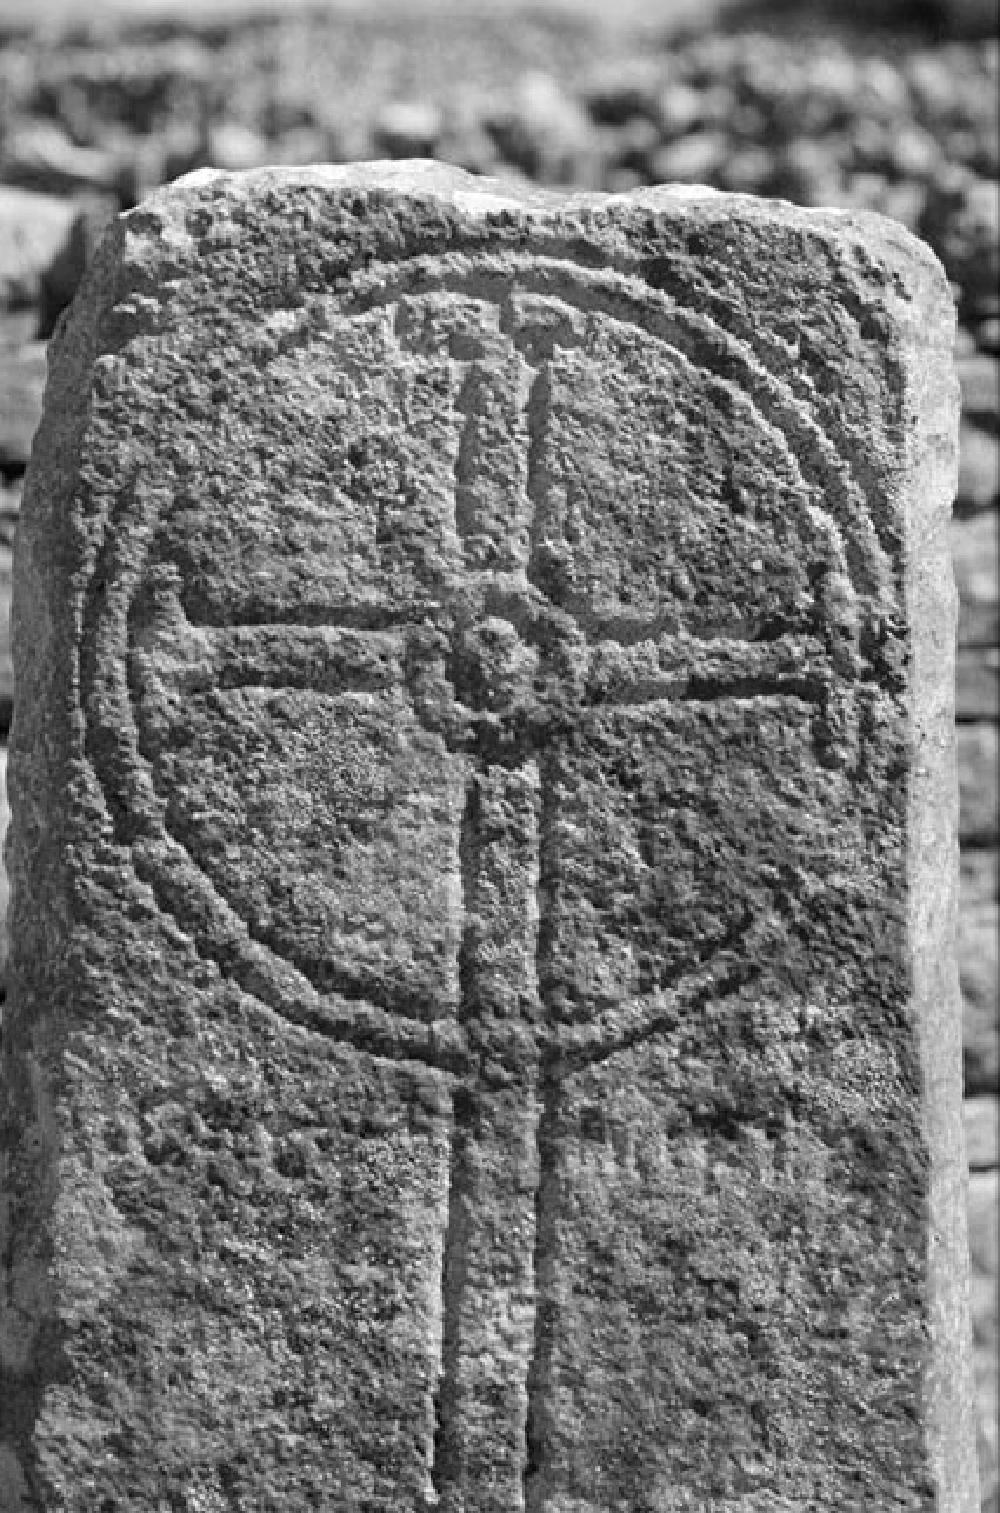 Headstone, Aran Islands, Co. Galway